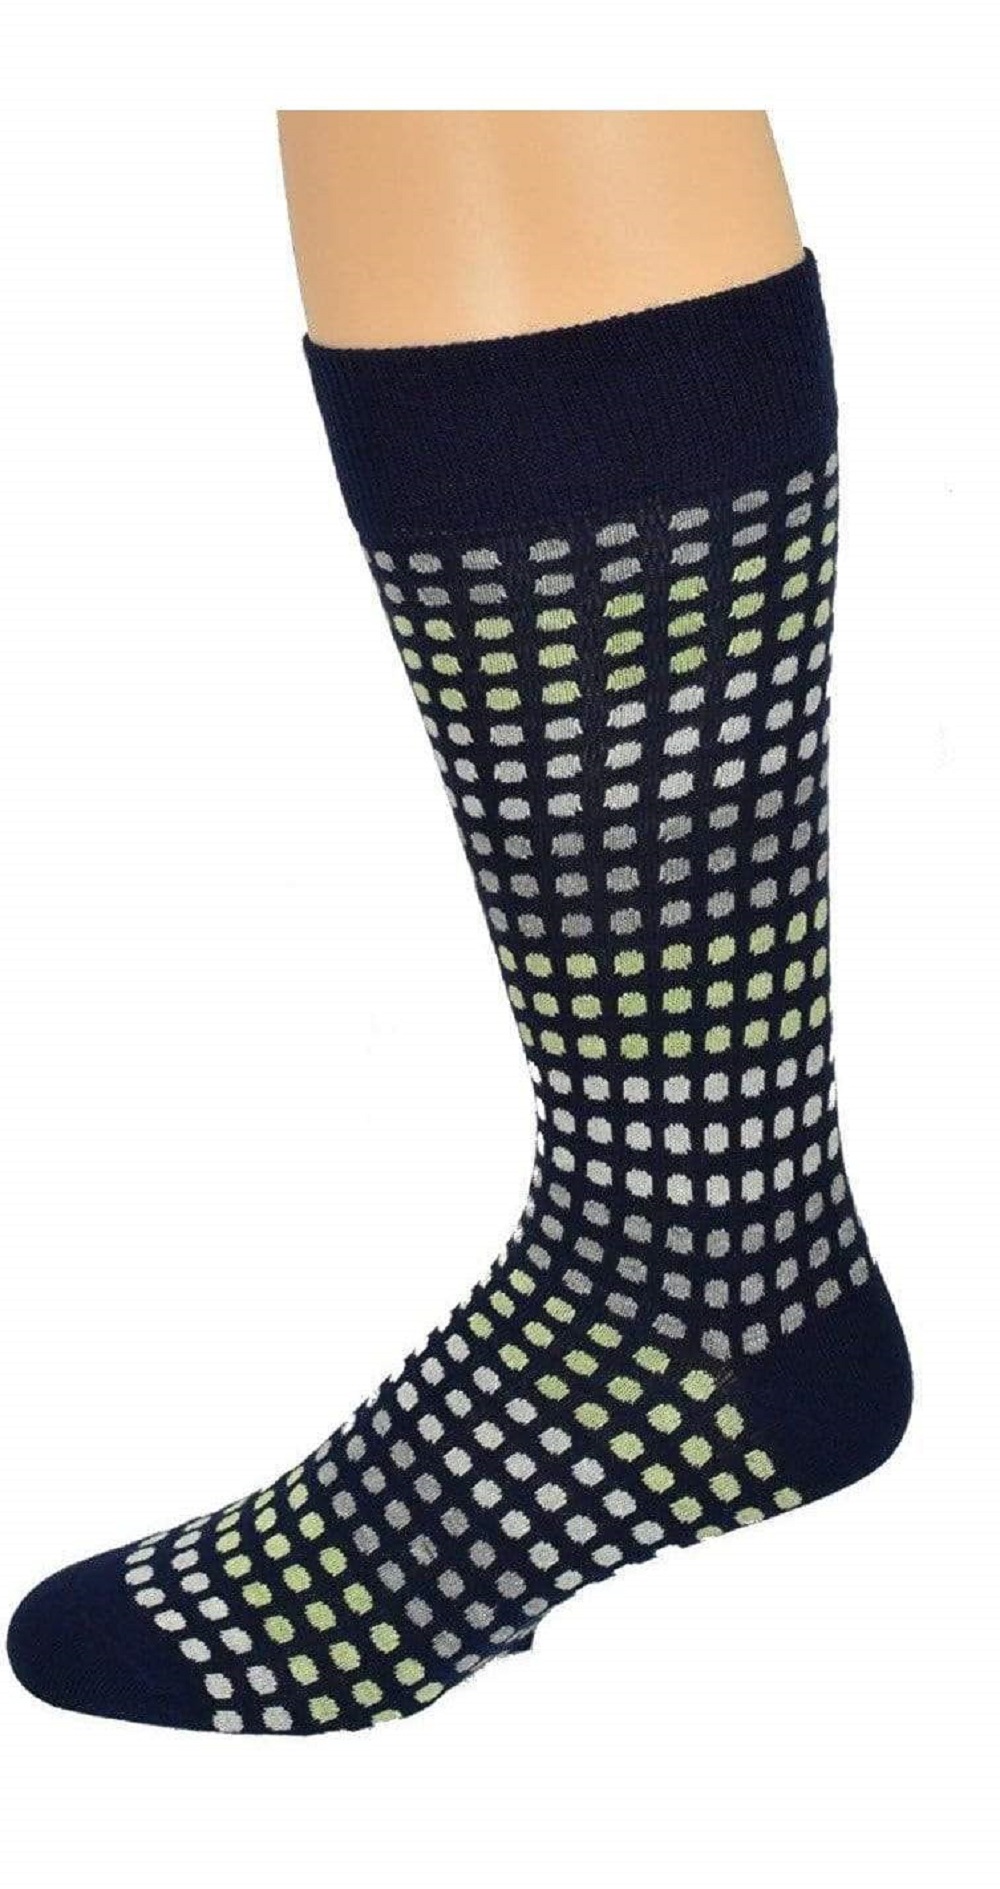 Sierra Socks Men's Casual Cotton Blend Fashion Design Mid Calf Dress Crew Socks, 3 Pairs (One Size: Fits US Men’s Shoe Size 6-12/ Sock Size, Navy Square/Navy Plain (M5500U)) - image 2 of 5